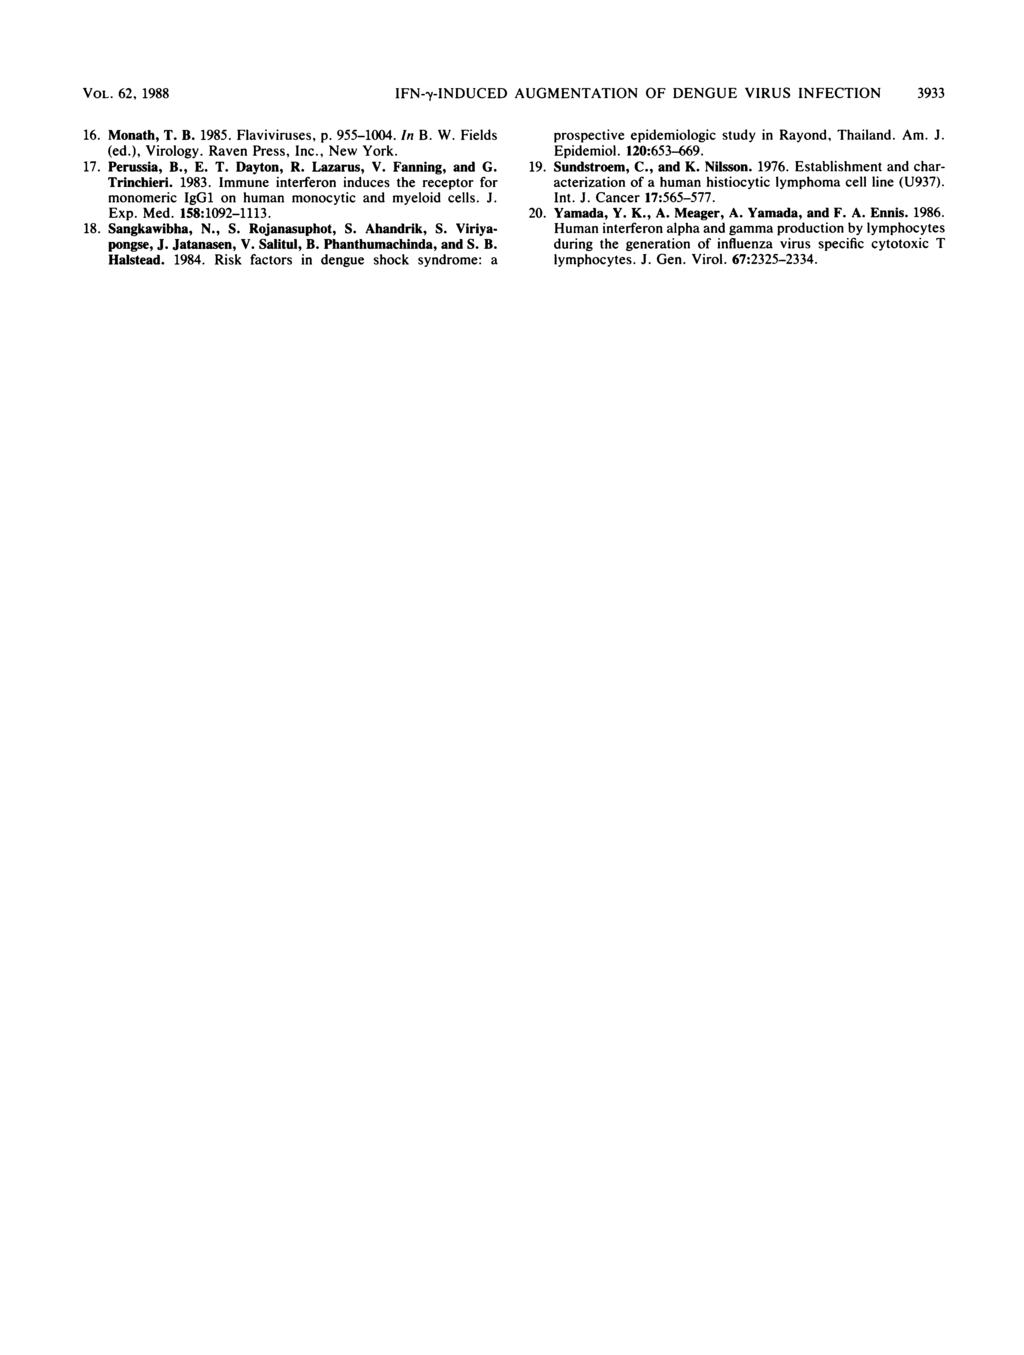 VOL. 62, 1988 IFN-,y-INDUCED AUGMENTATION OF DENGUE VIRUS INFECTION 3933 16. Monath, T. B. 1985. Flaviviruses, p. 955-1004. In B. W. Fields (ed.), Virology. Raven Press, Inc., New York. 17.